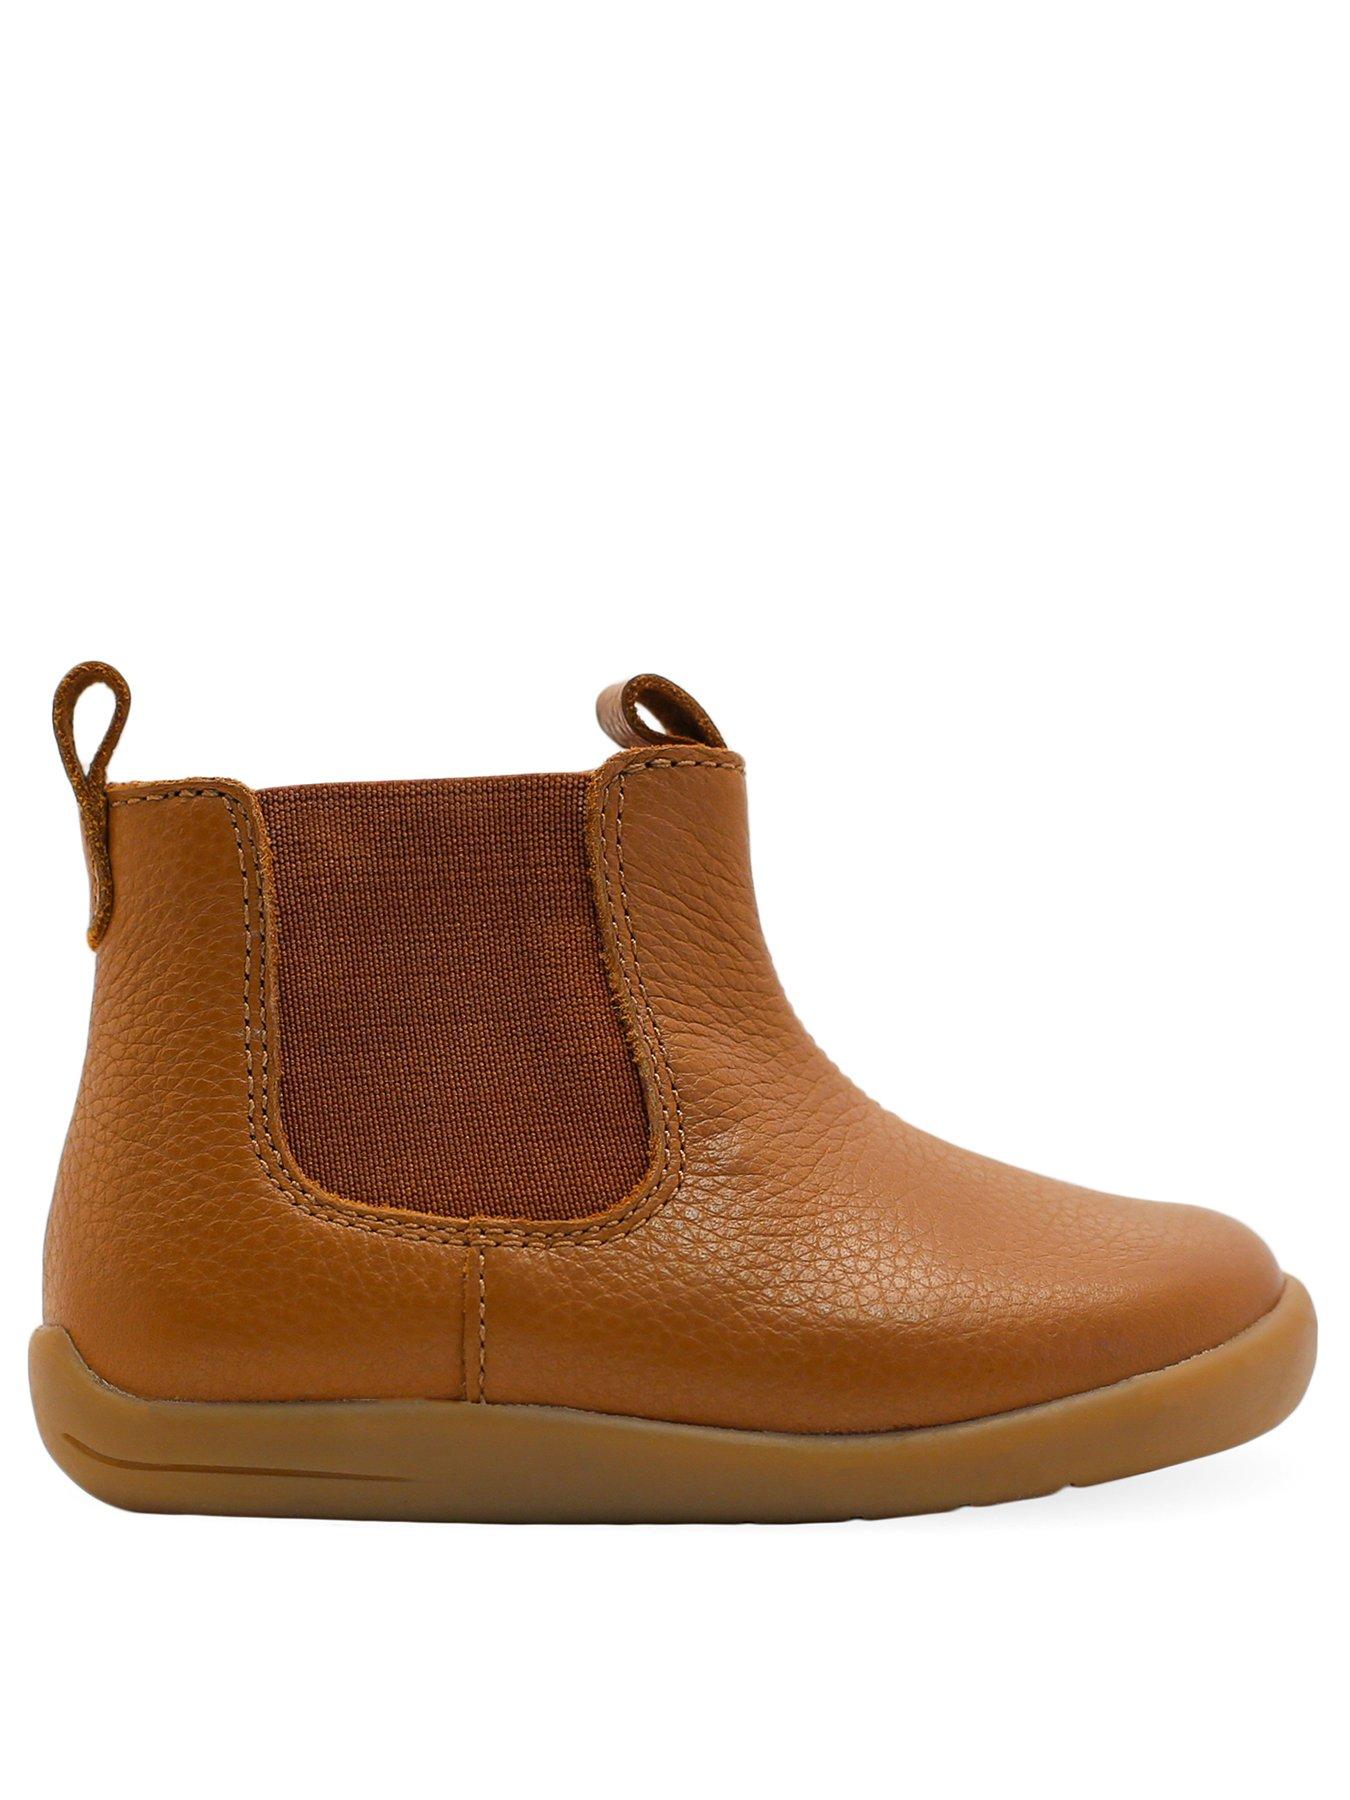 Kids Avenue Boot - Tan Leather